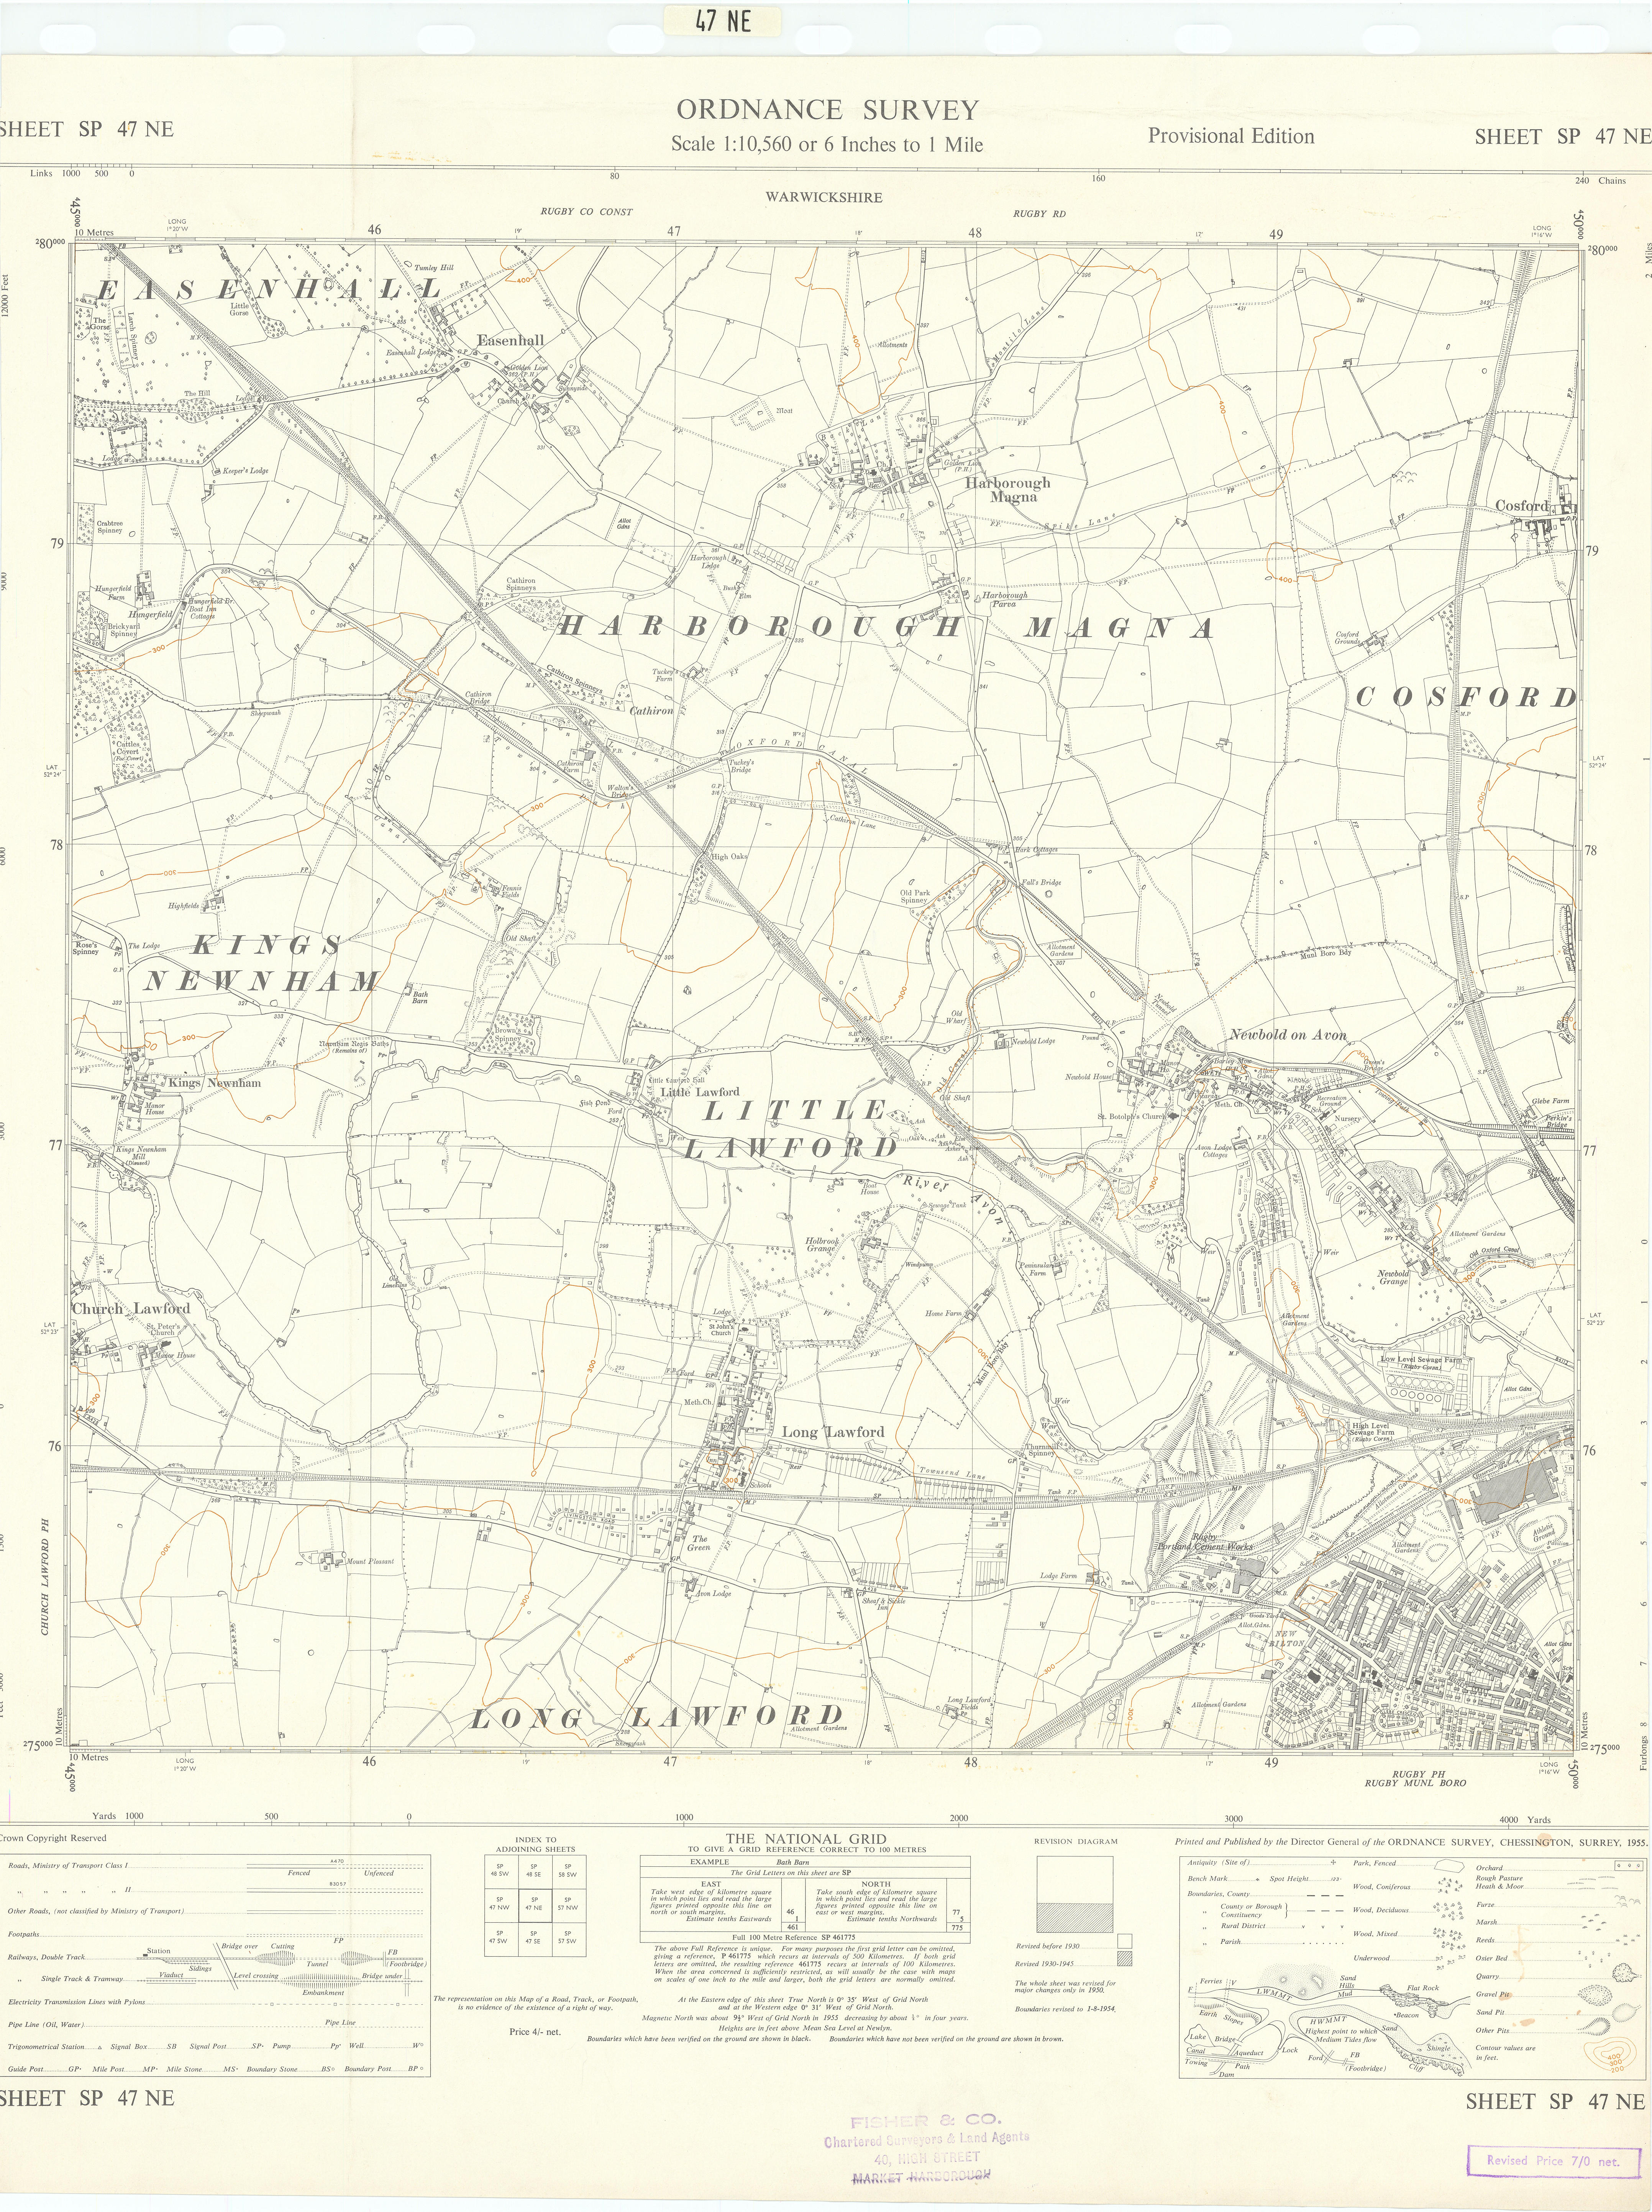 Ordnance Survey SP47NE Warks Rugby Newbold/Avon Long Lawford Harborough 1955 map